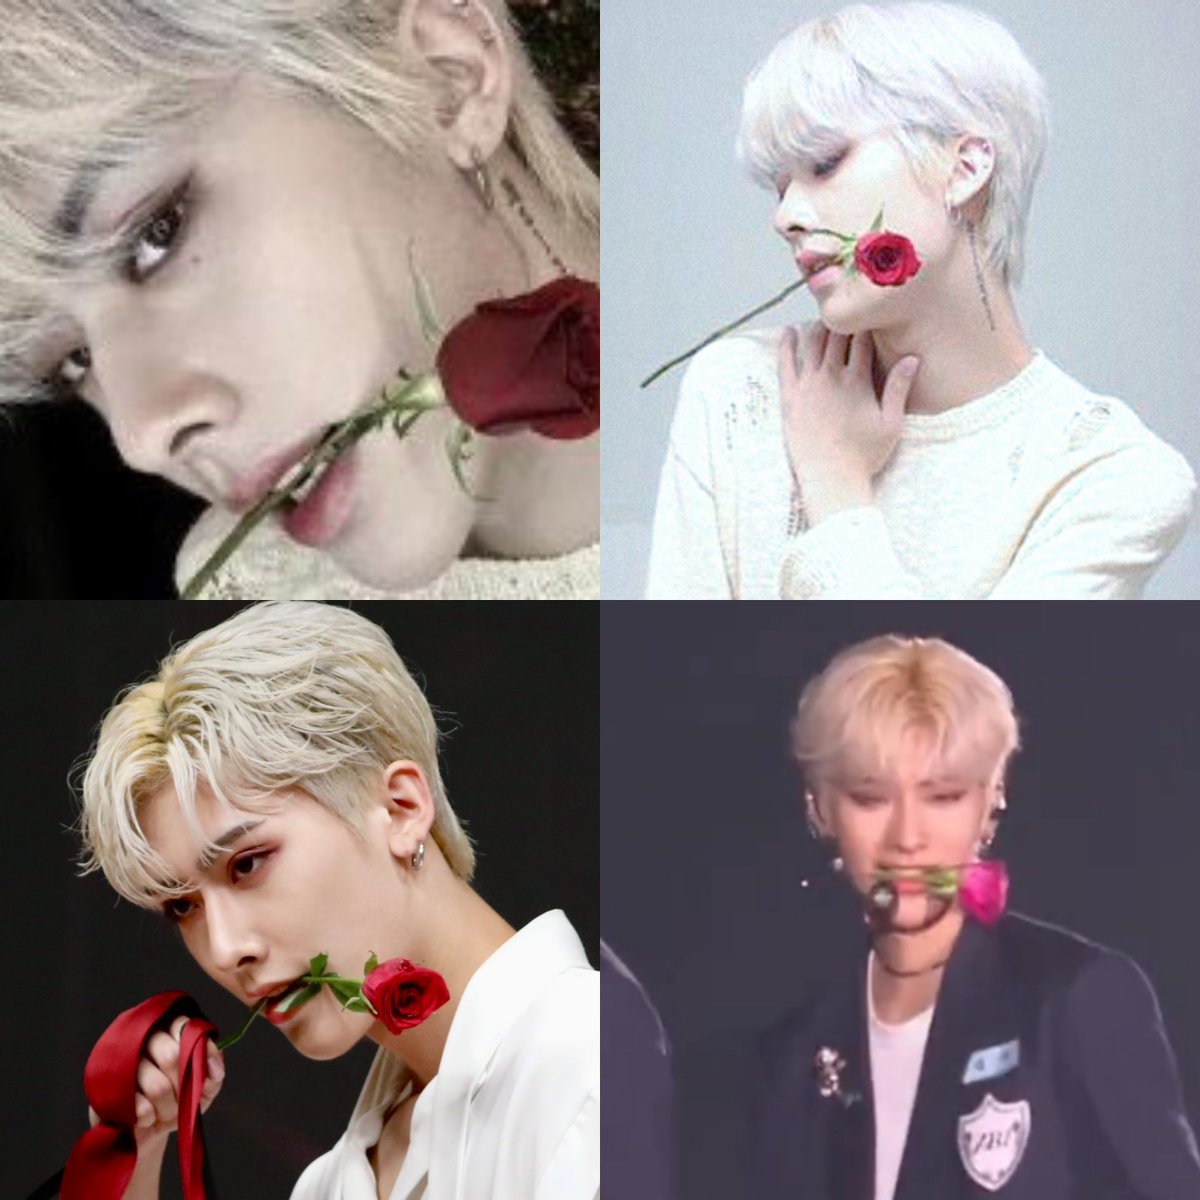 so he likes biting roses